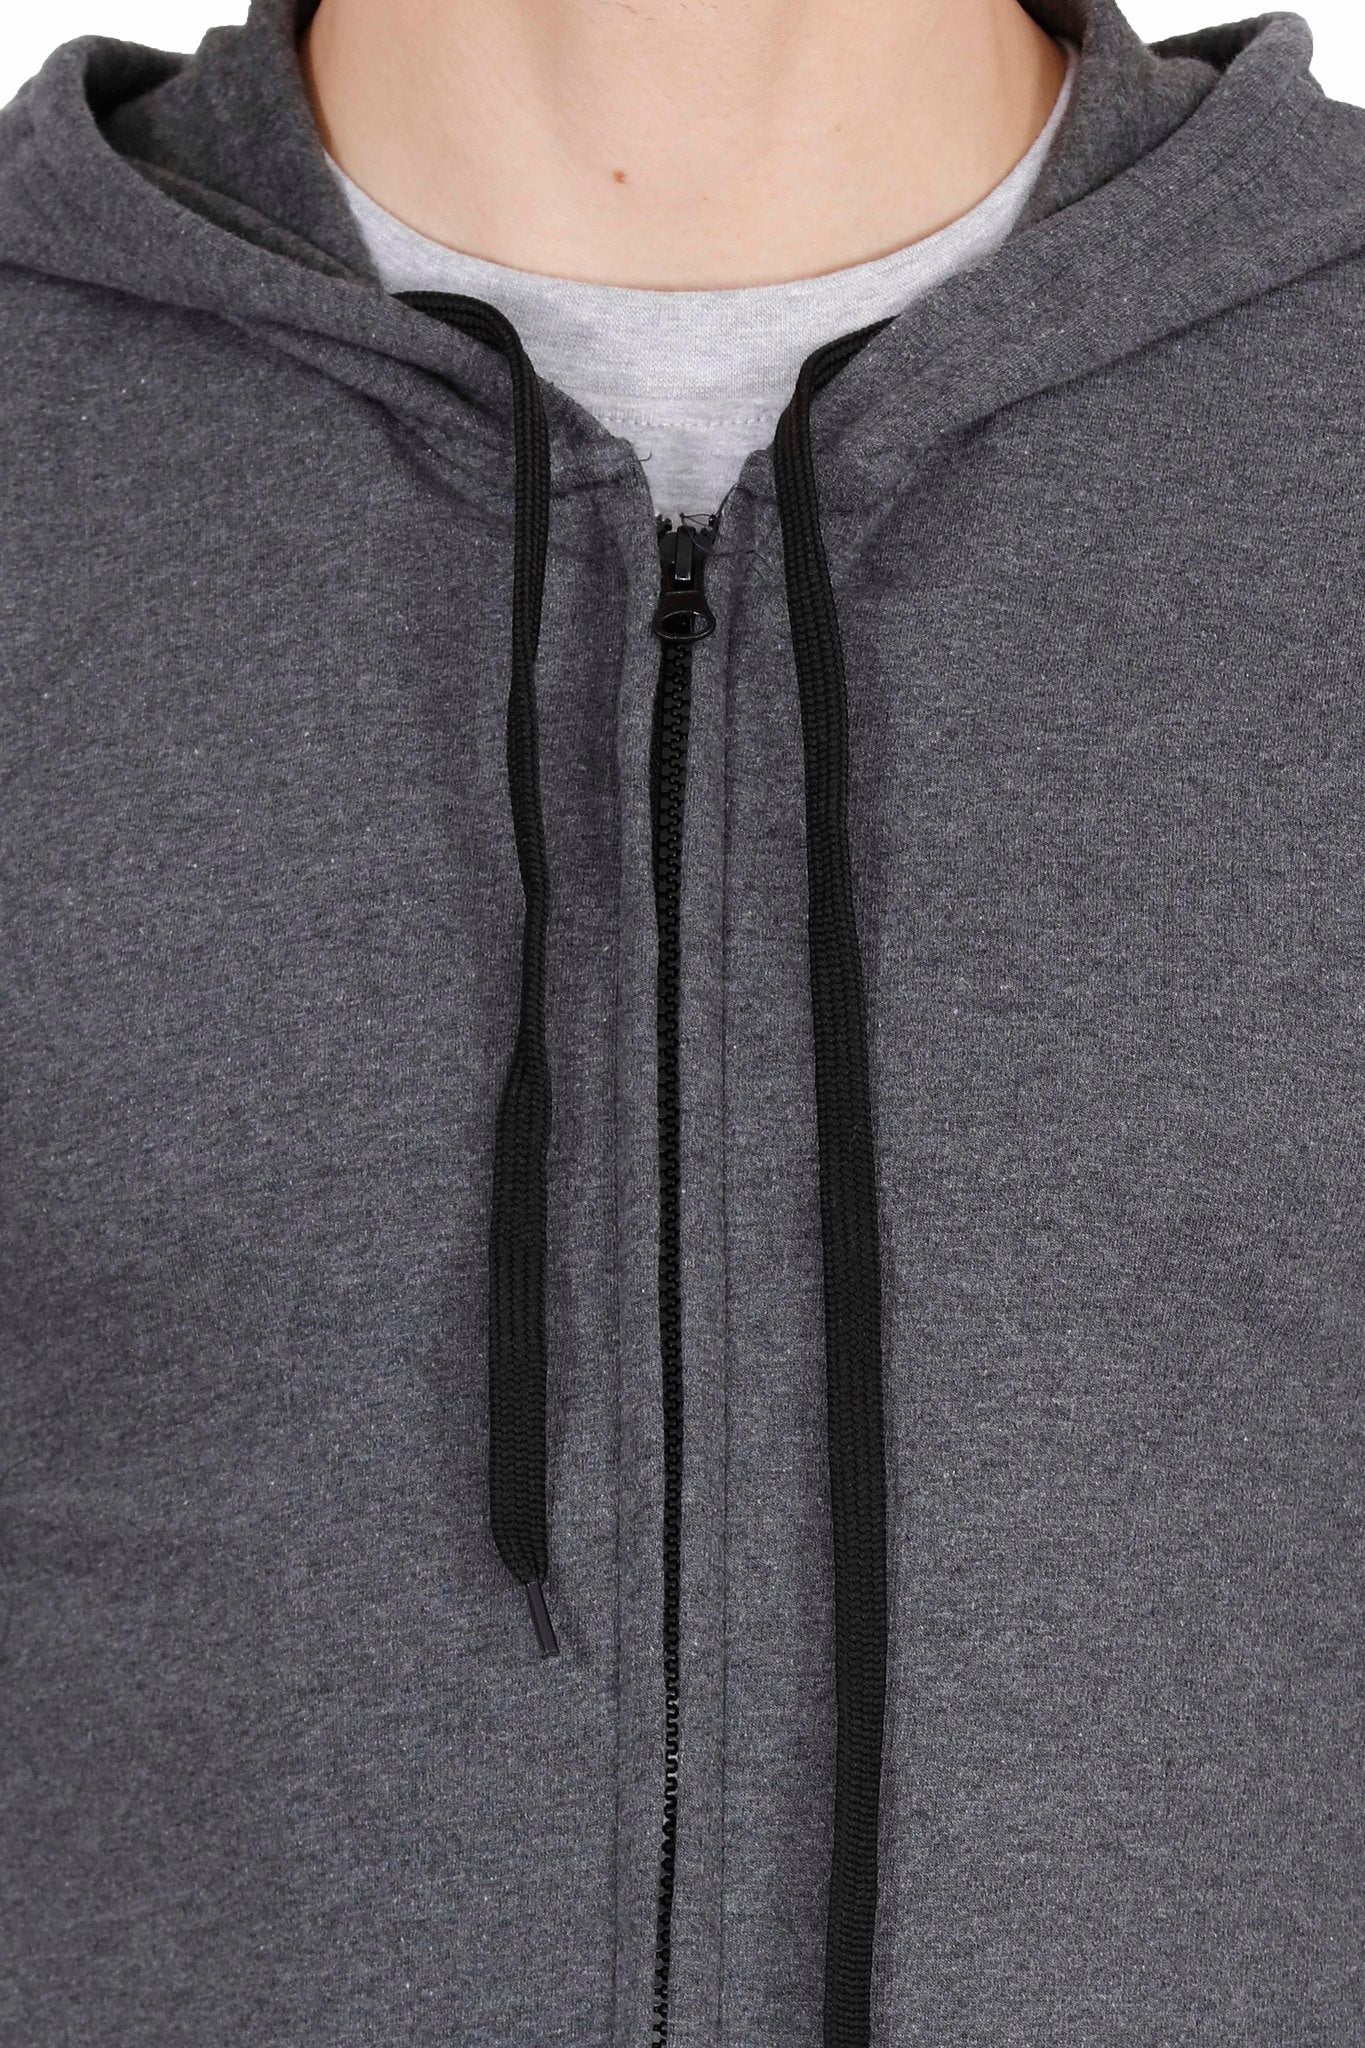 Men's Cotton Plain Full Sleeve Charcoal Melange Color Sweatshirt/Hoodies